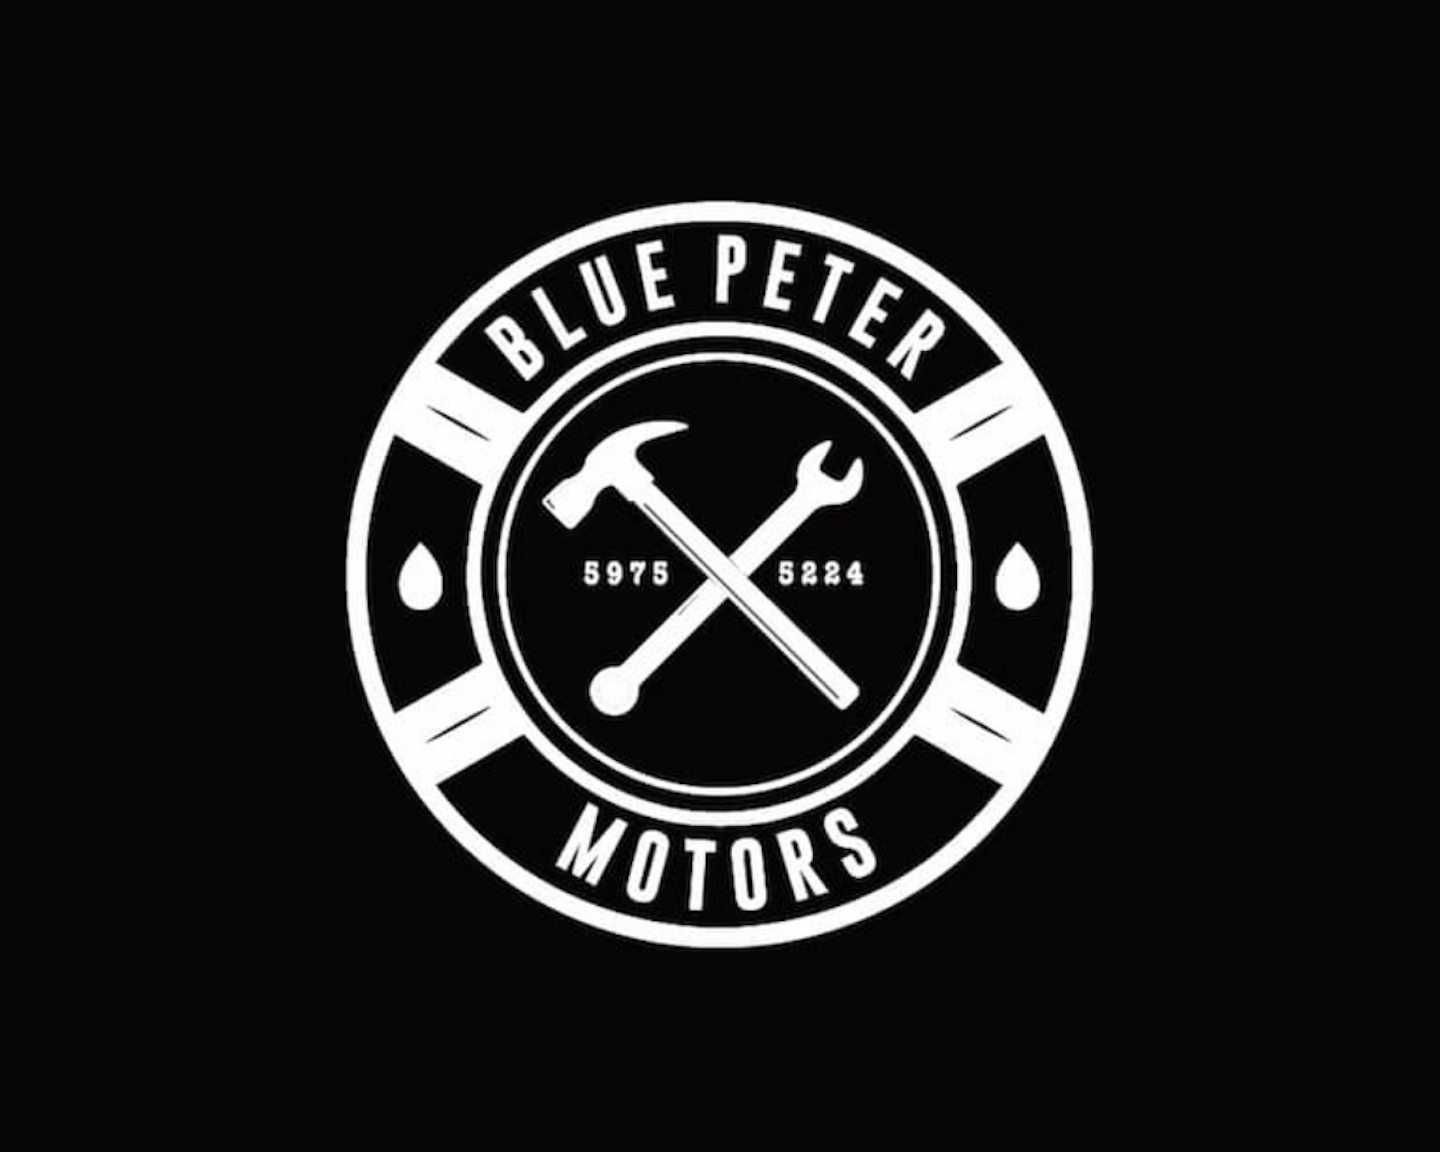 blue peter motor logo